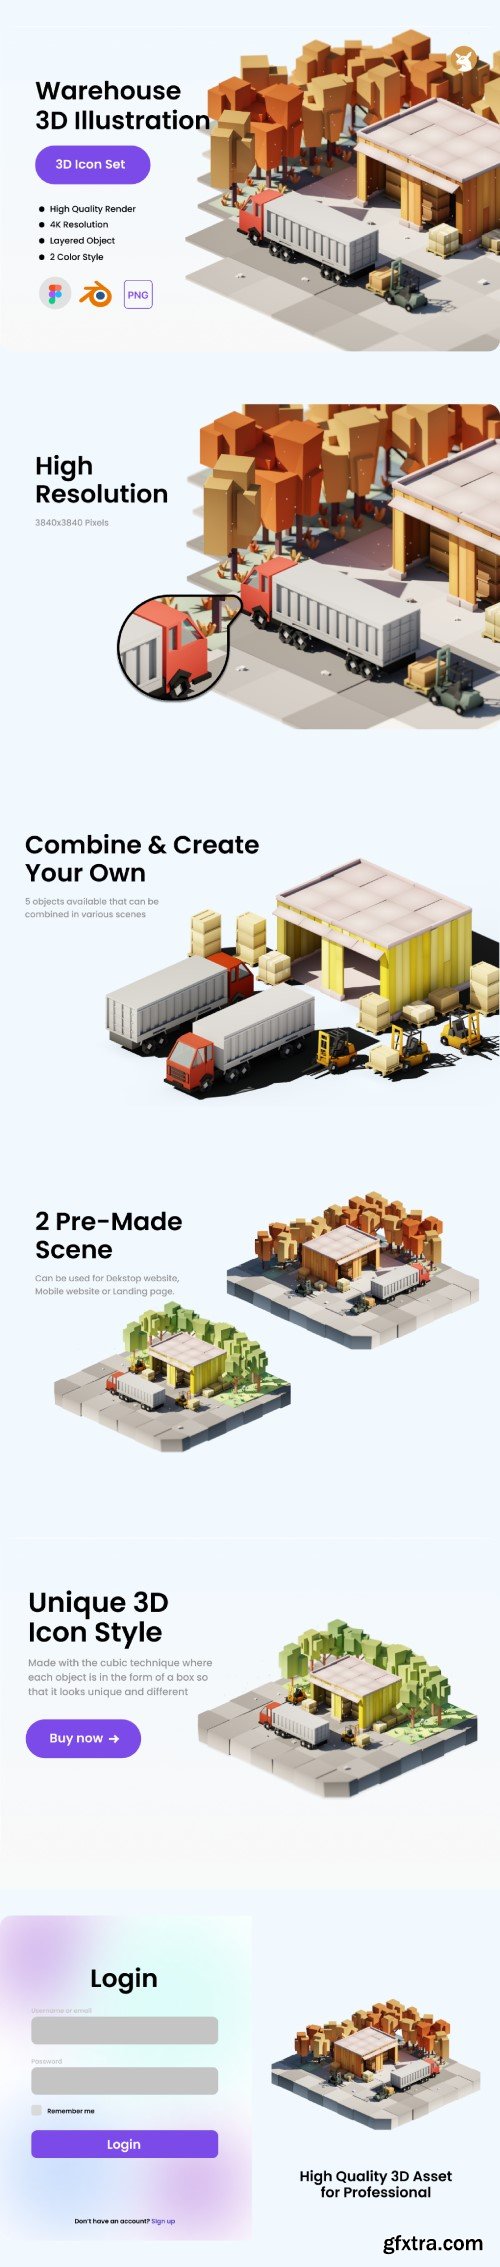 UI8 - Warehouse 3D Illustration